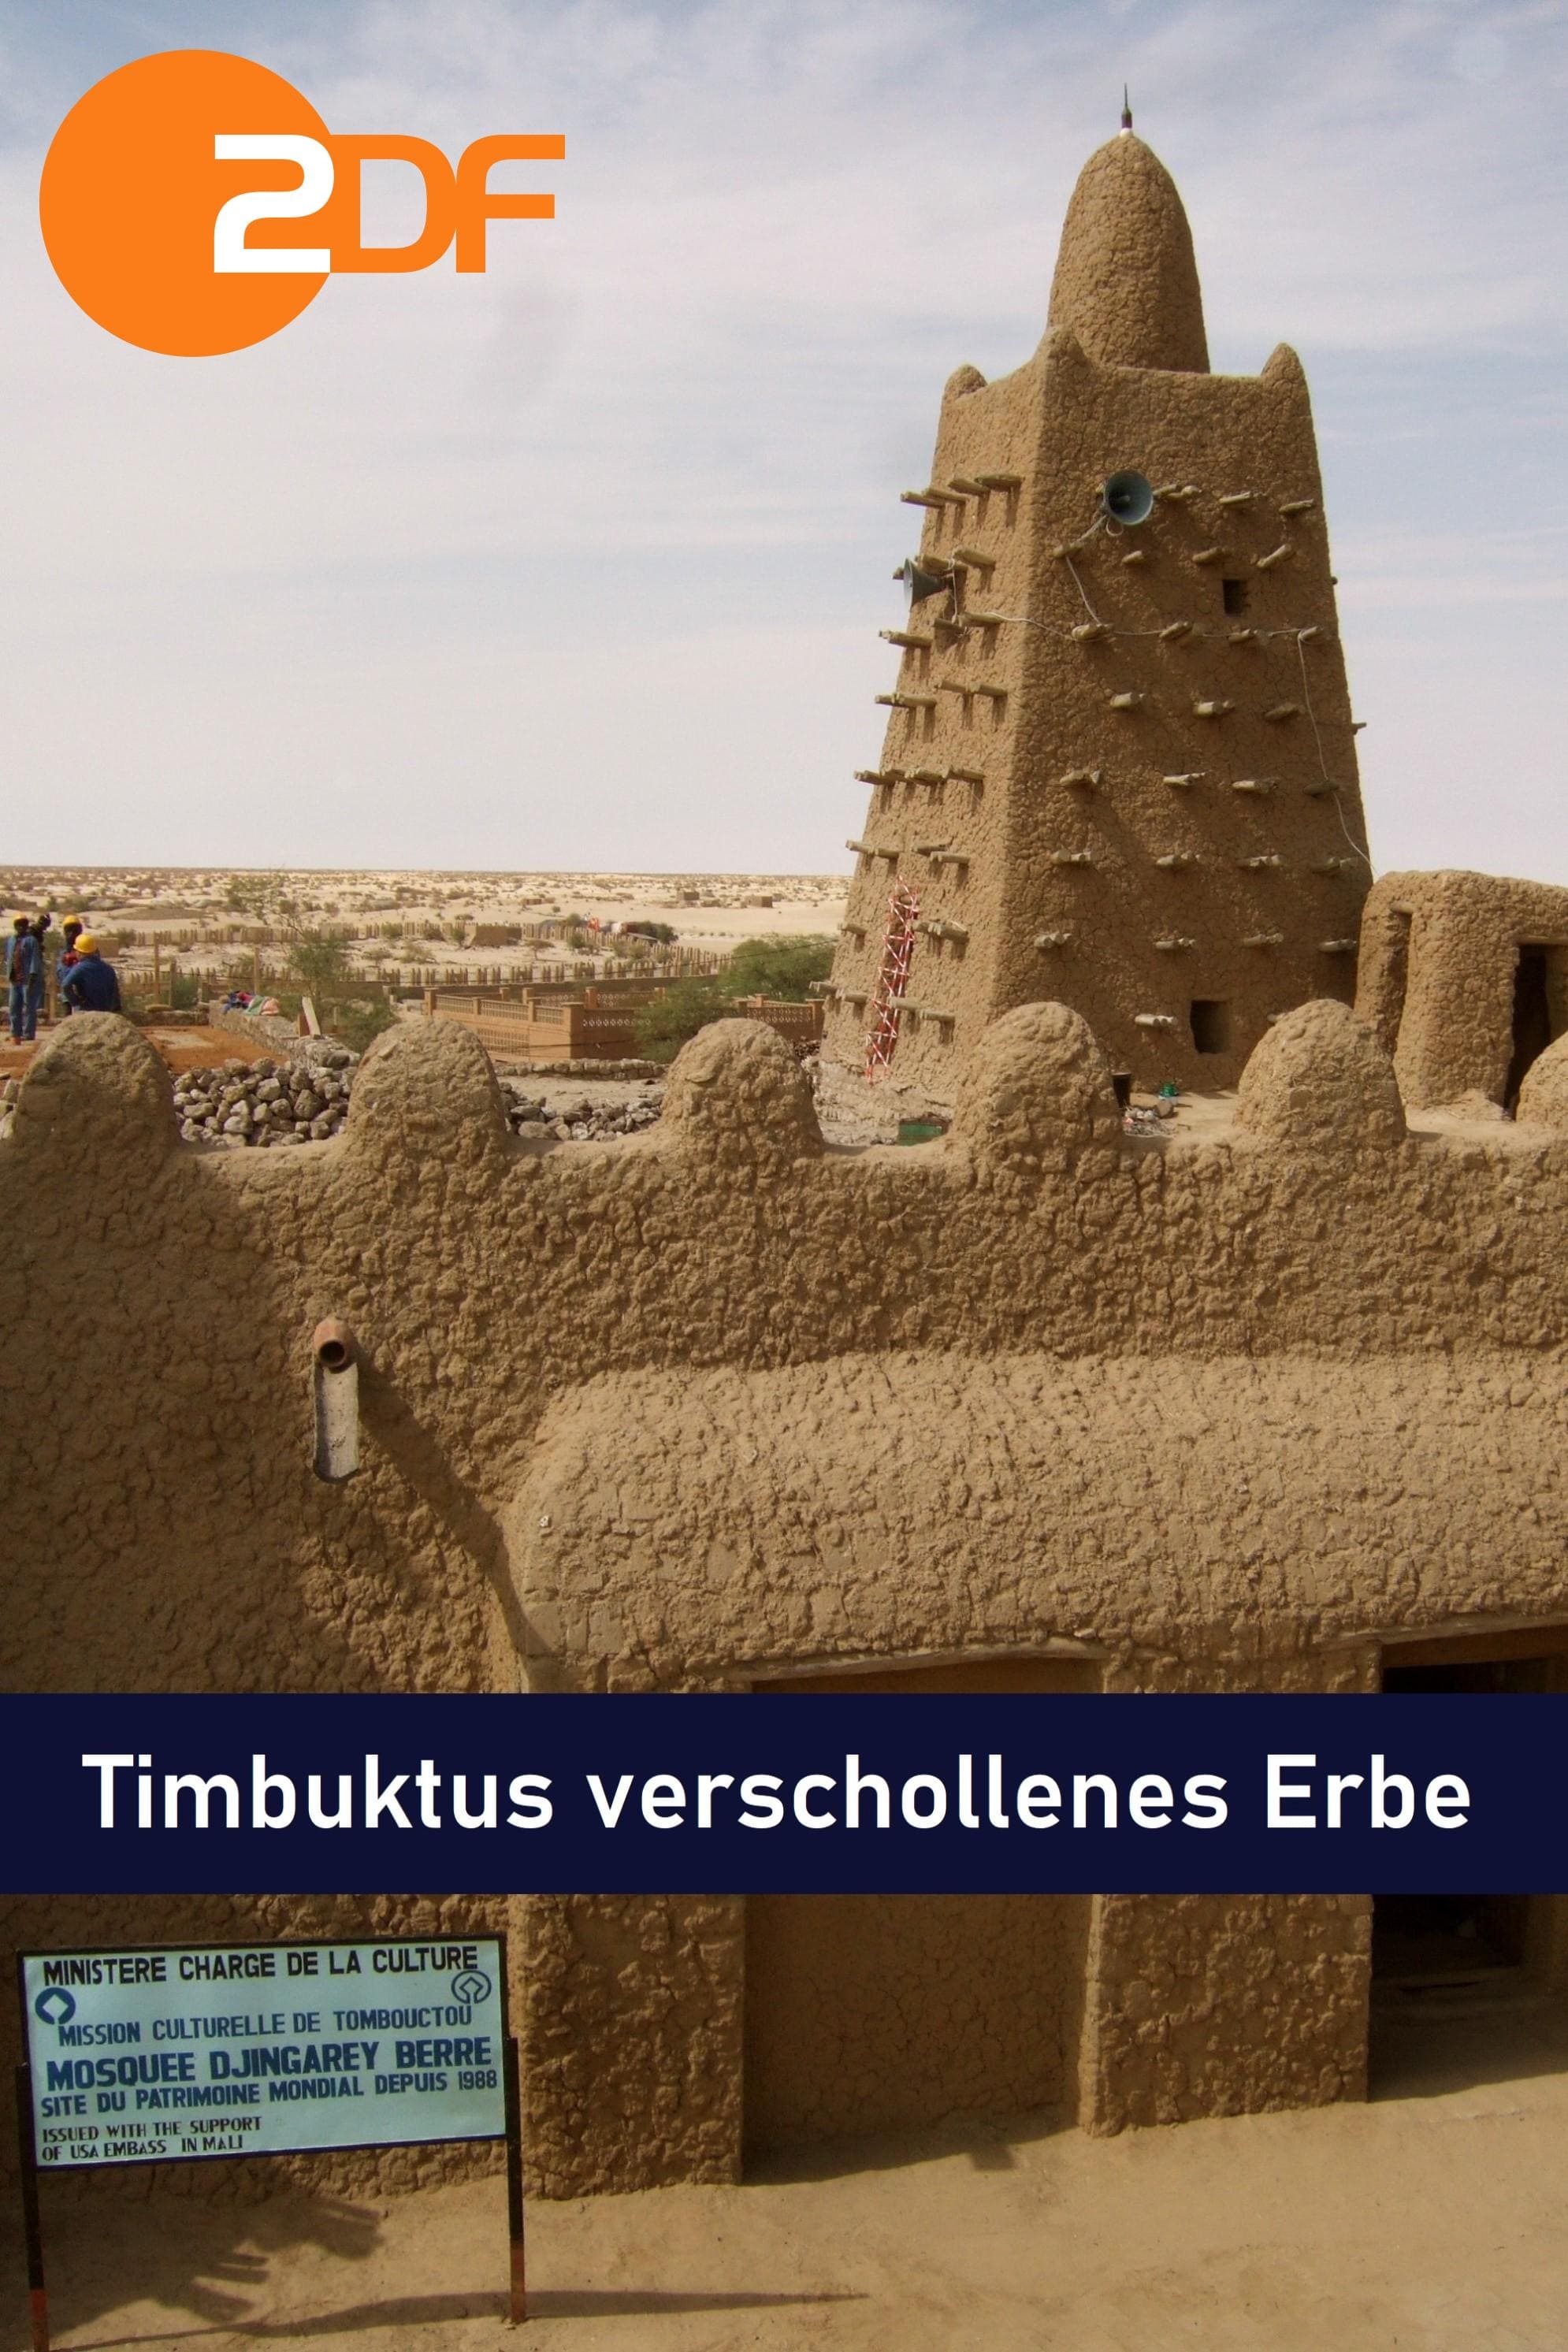 Timbuktus verschollenes Erbe - Vom Sande verweht